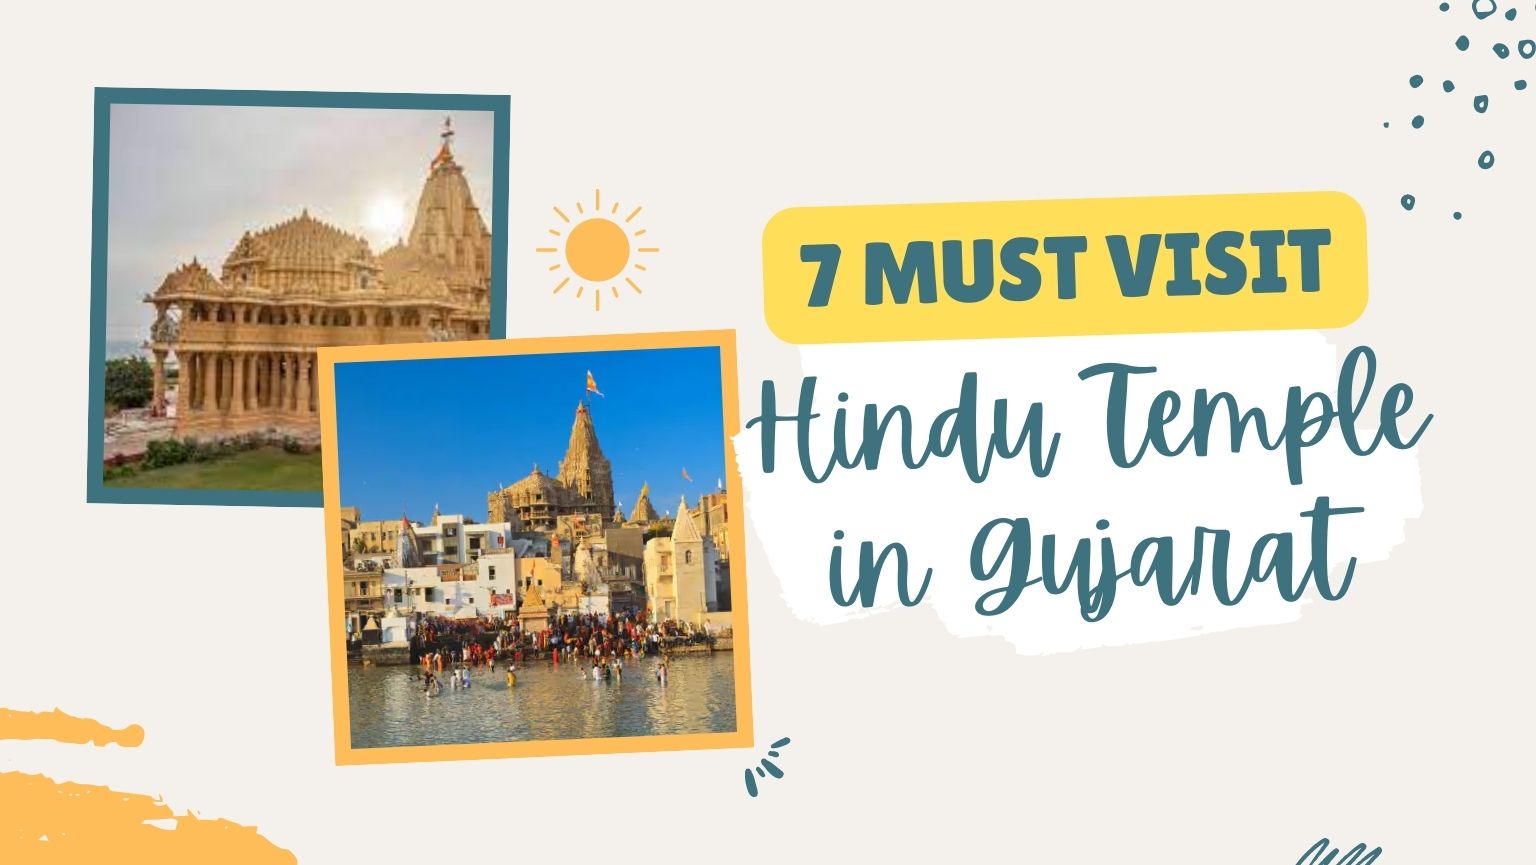 7 Must Visit Hindu Temple in Gujarat